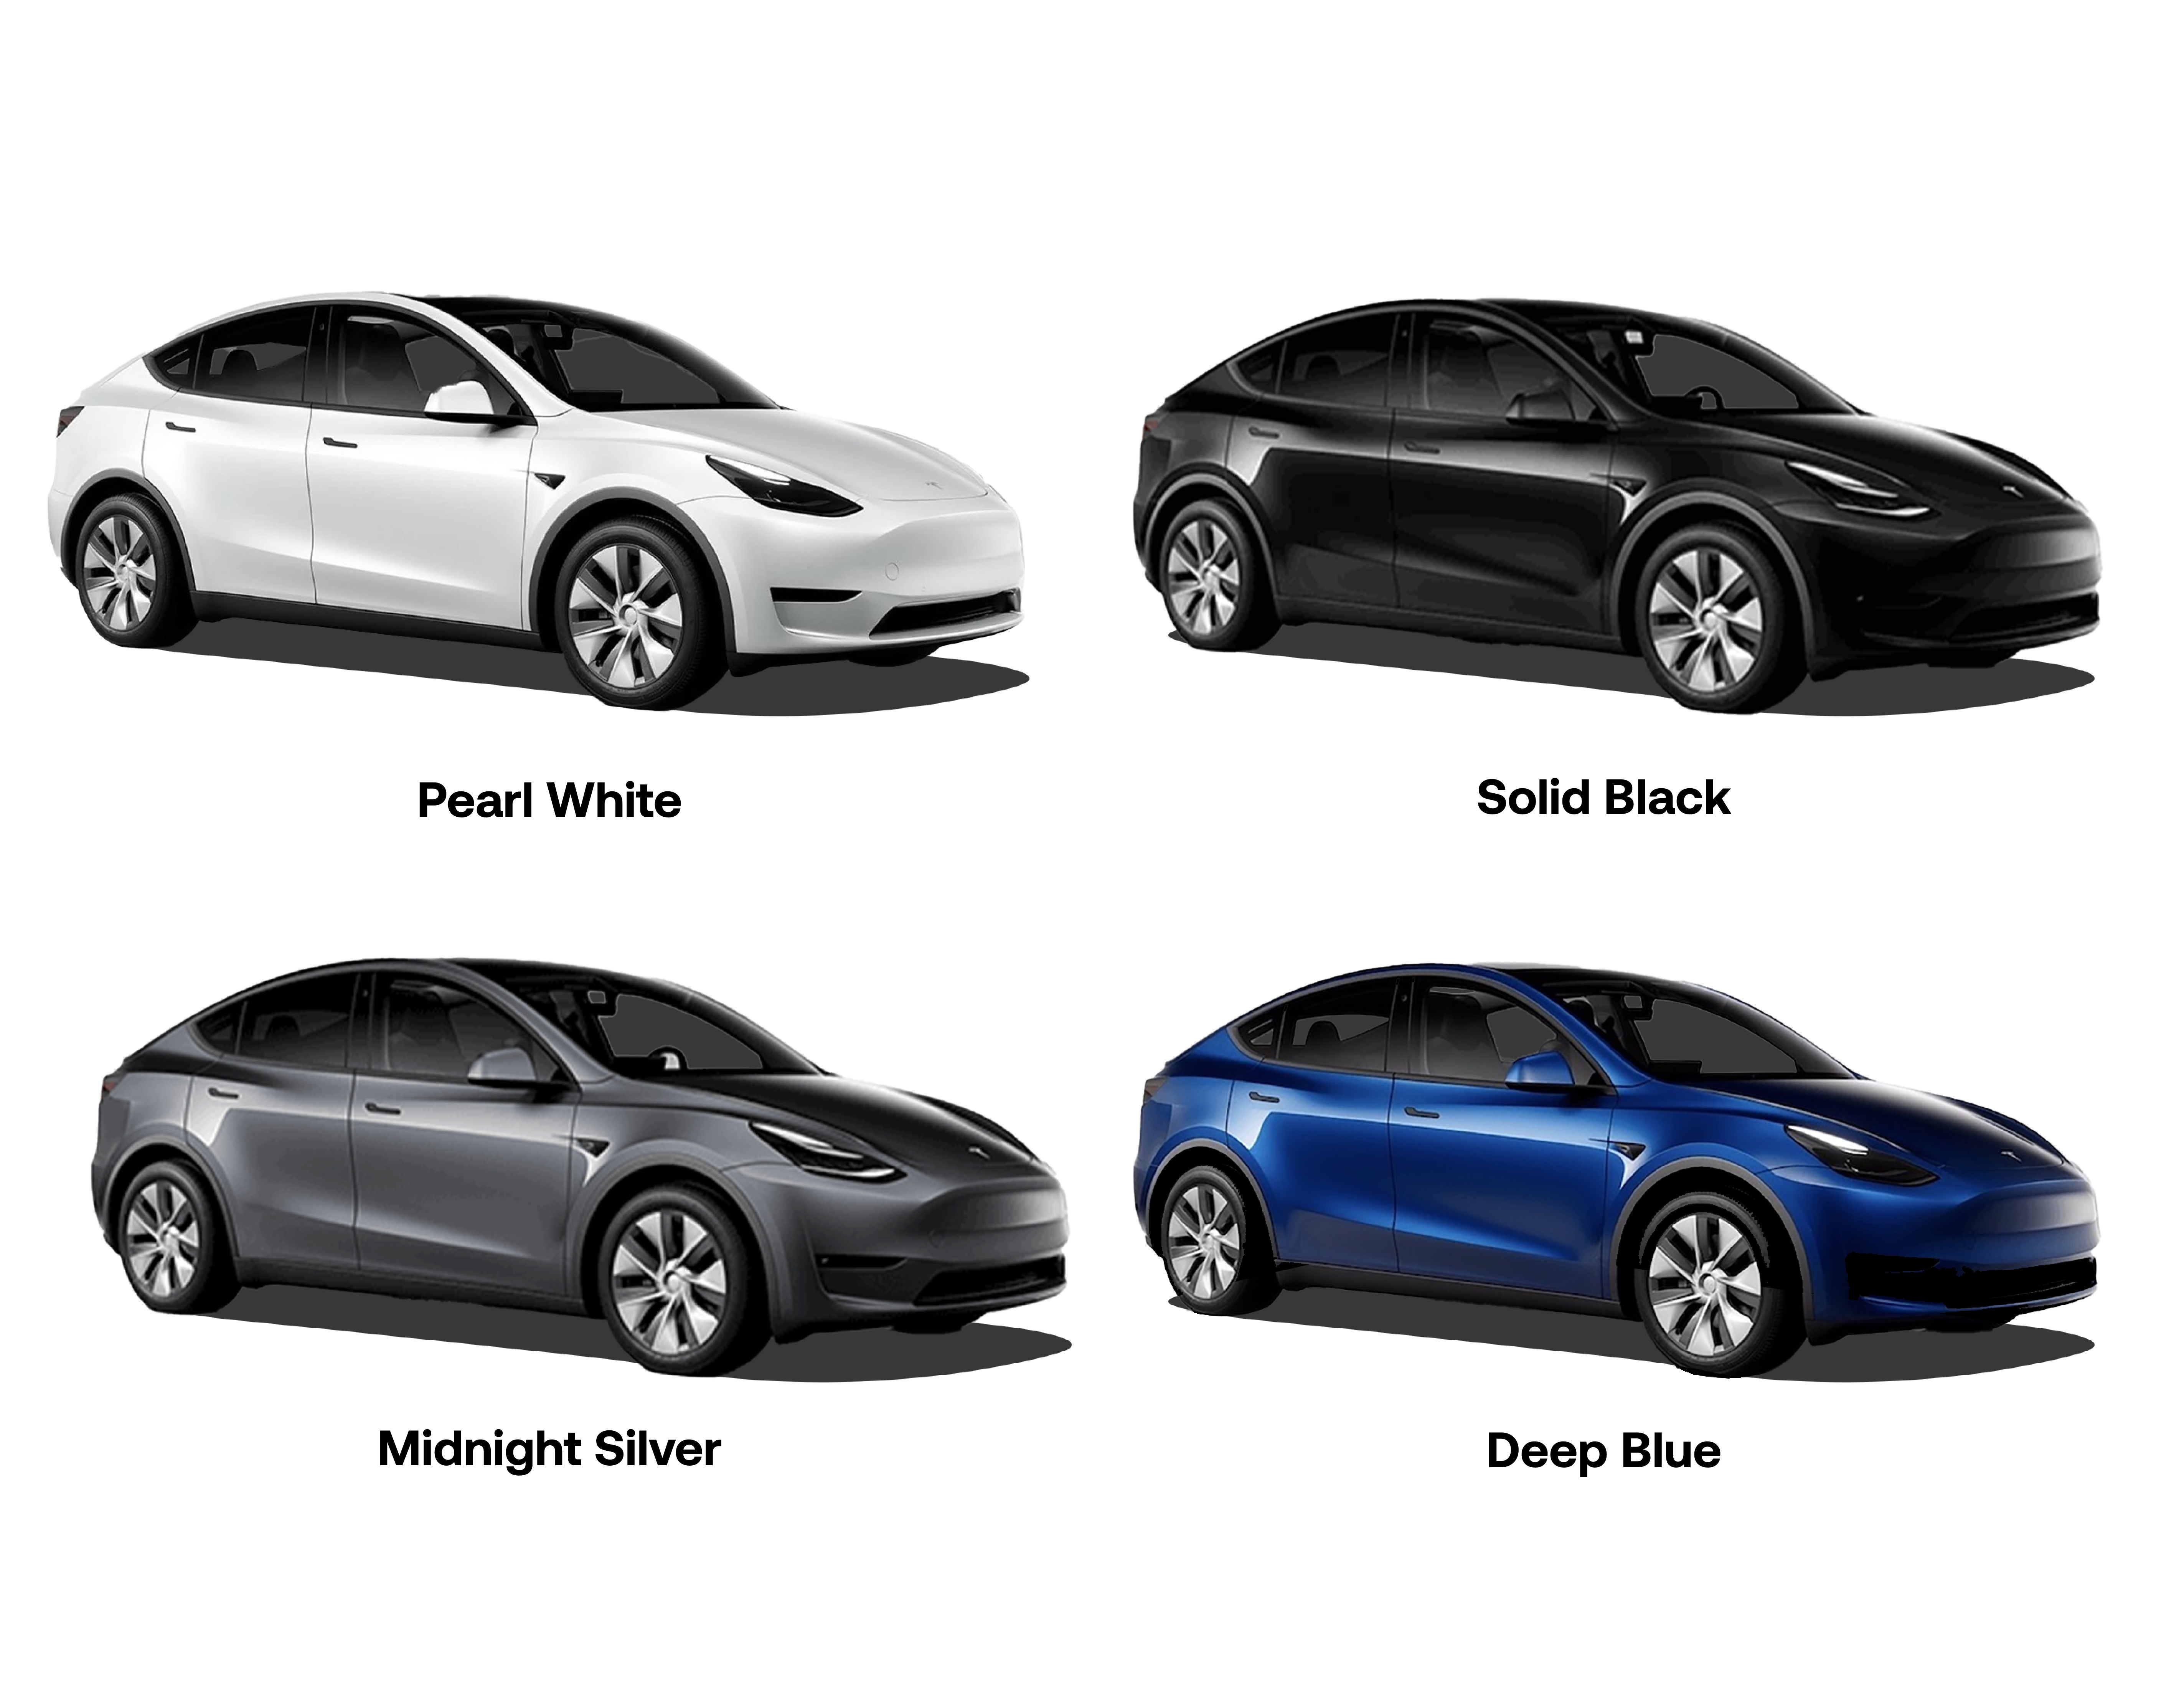 Get a Tesla Model Y Long Range Electric Car Subscription